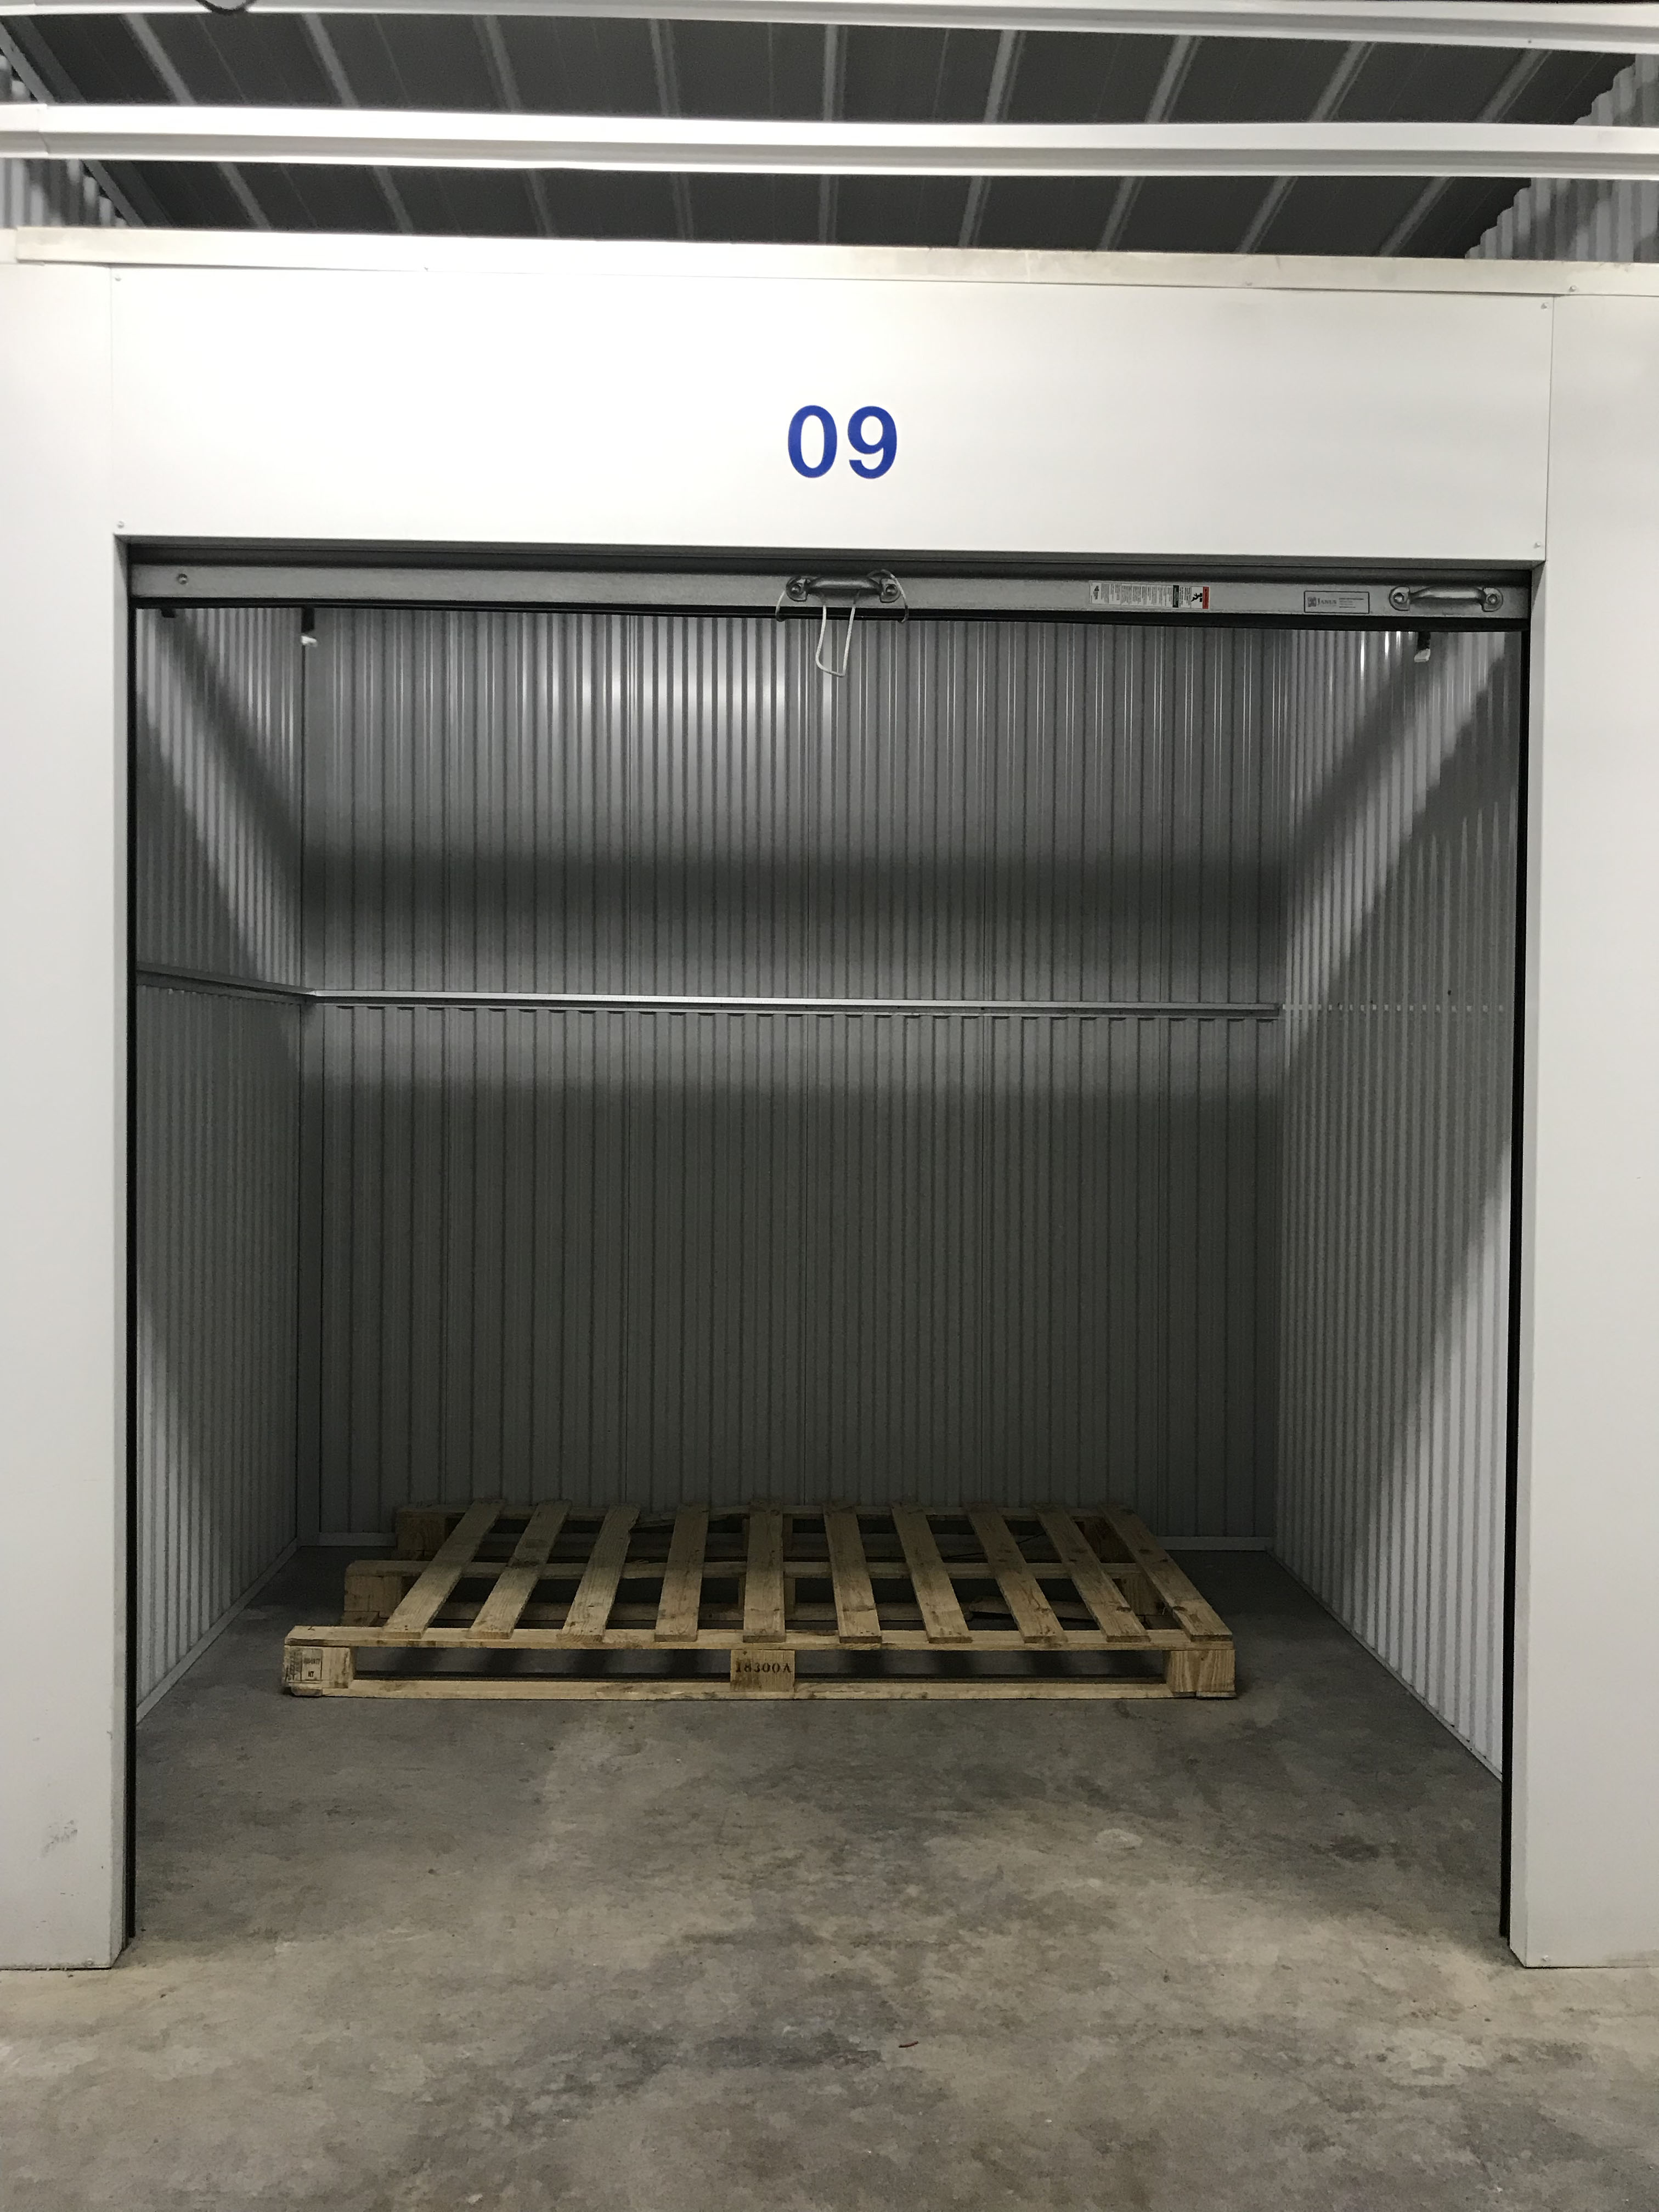 Climate Controlled Storage Unit (unit number 09)